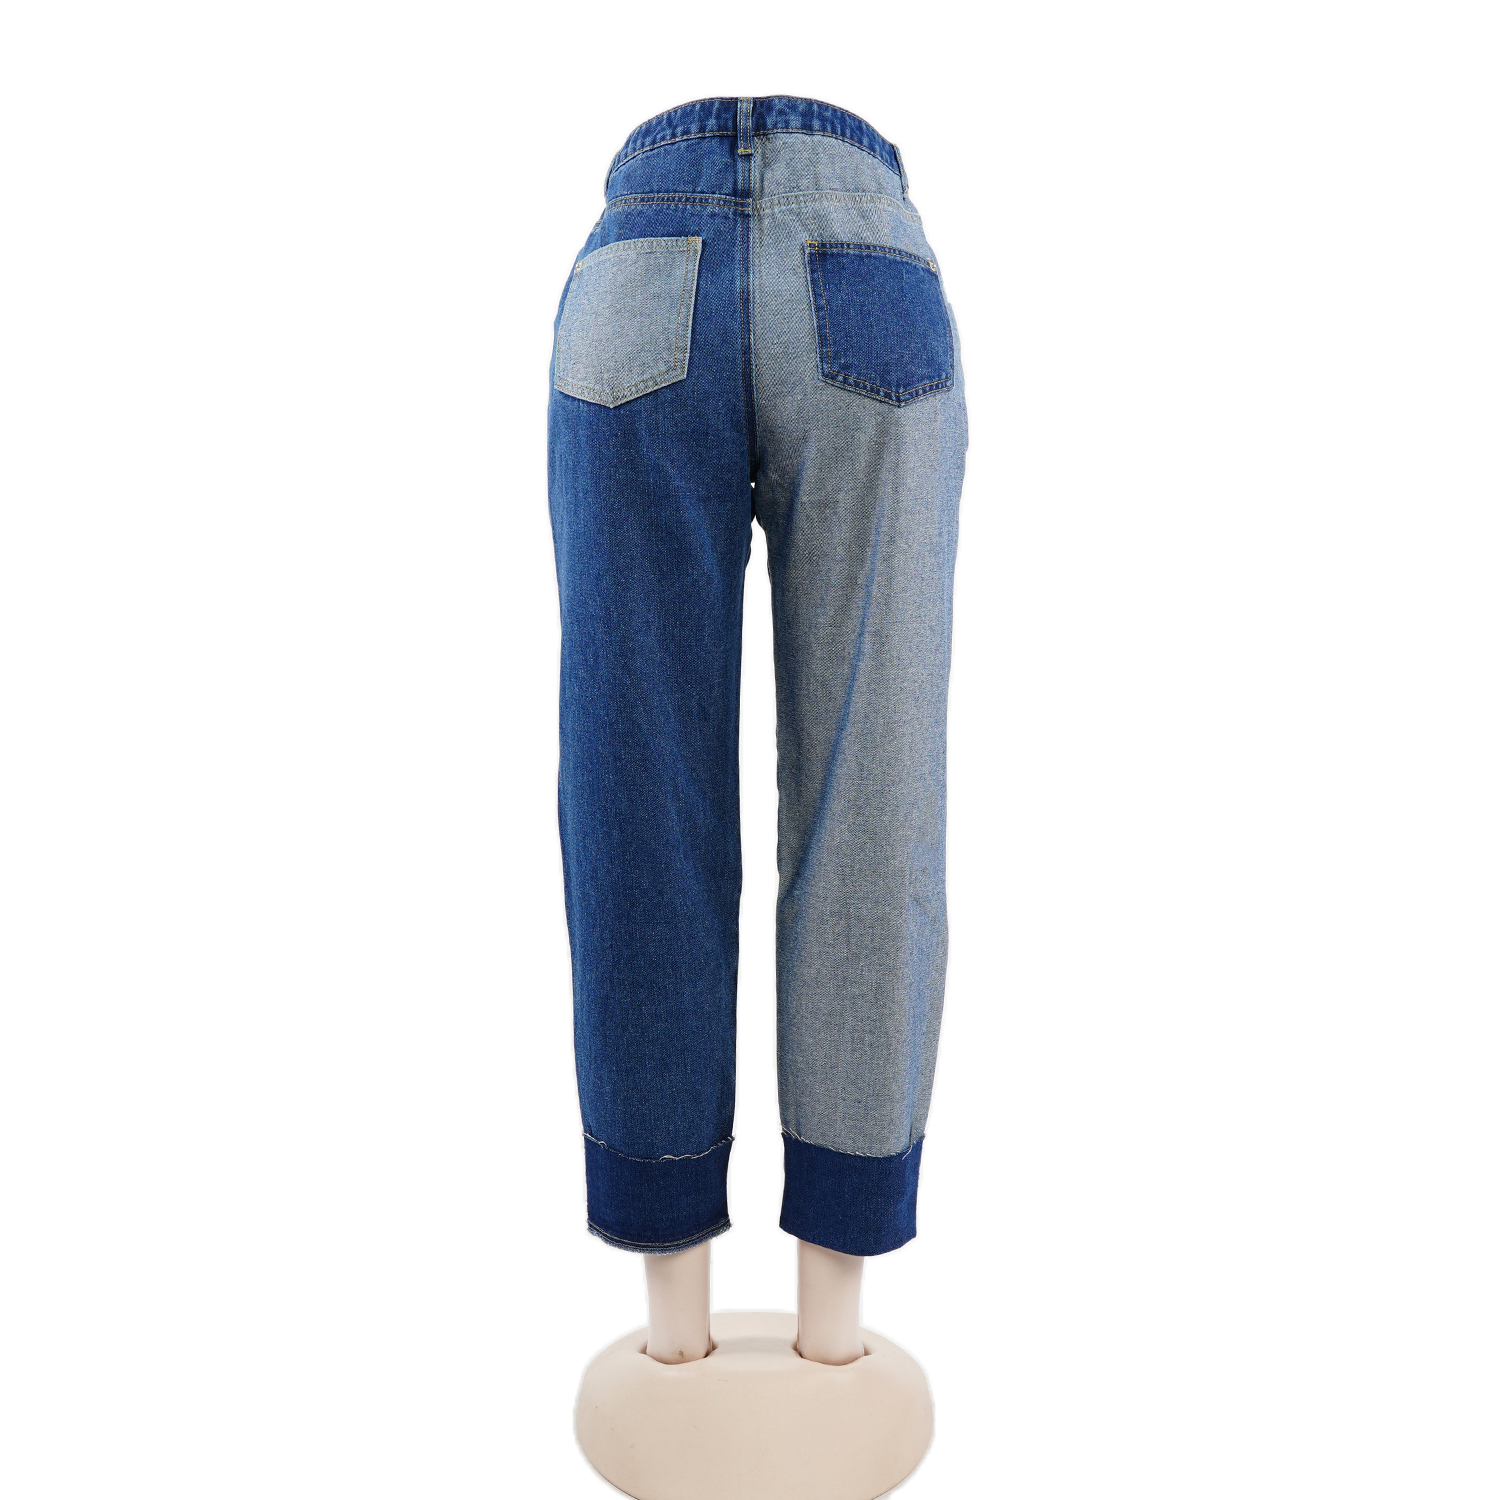 SKYKINGDOM europe american popular women jeans streetwear patched two colors jeans for women